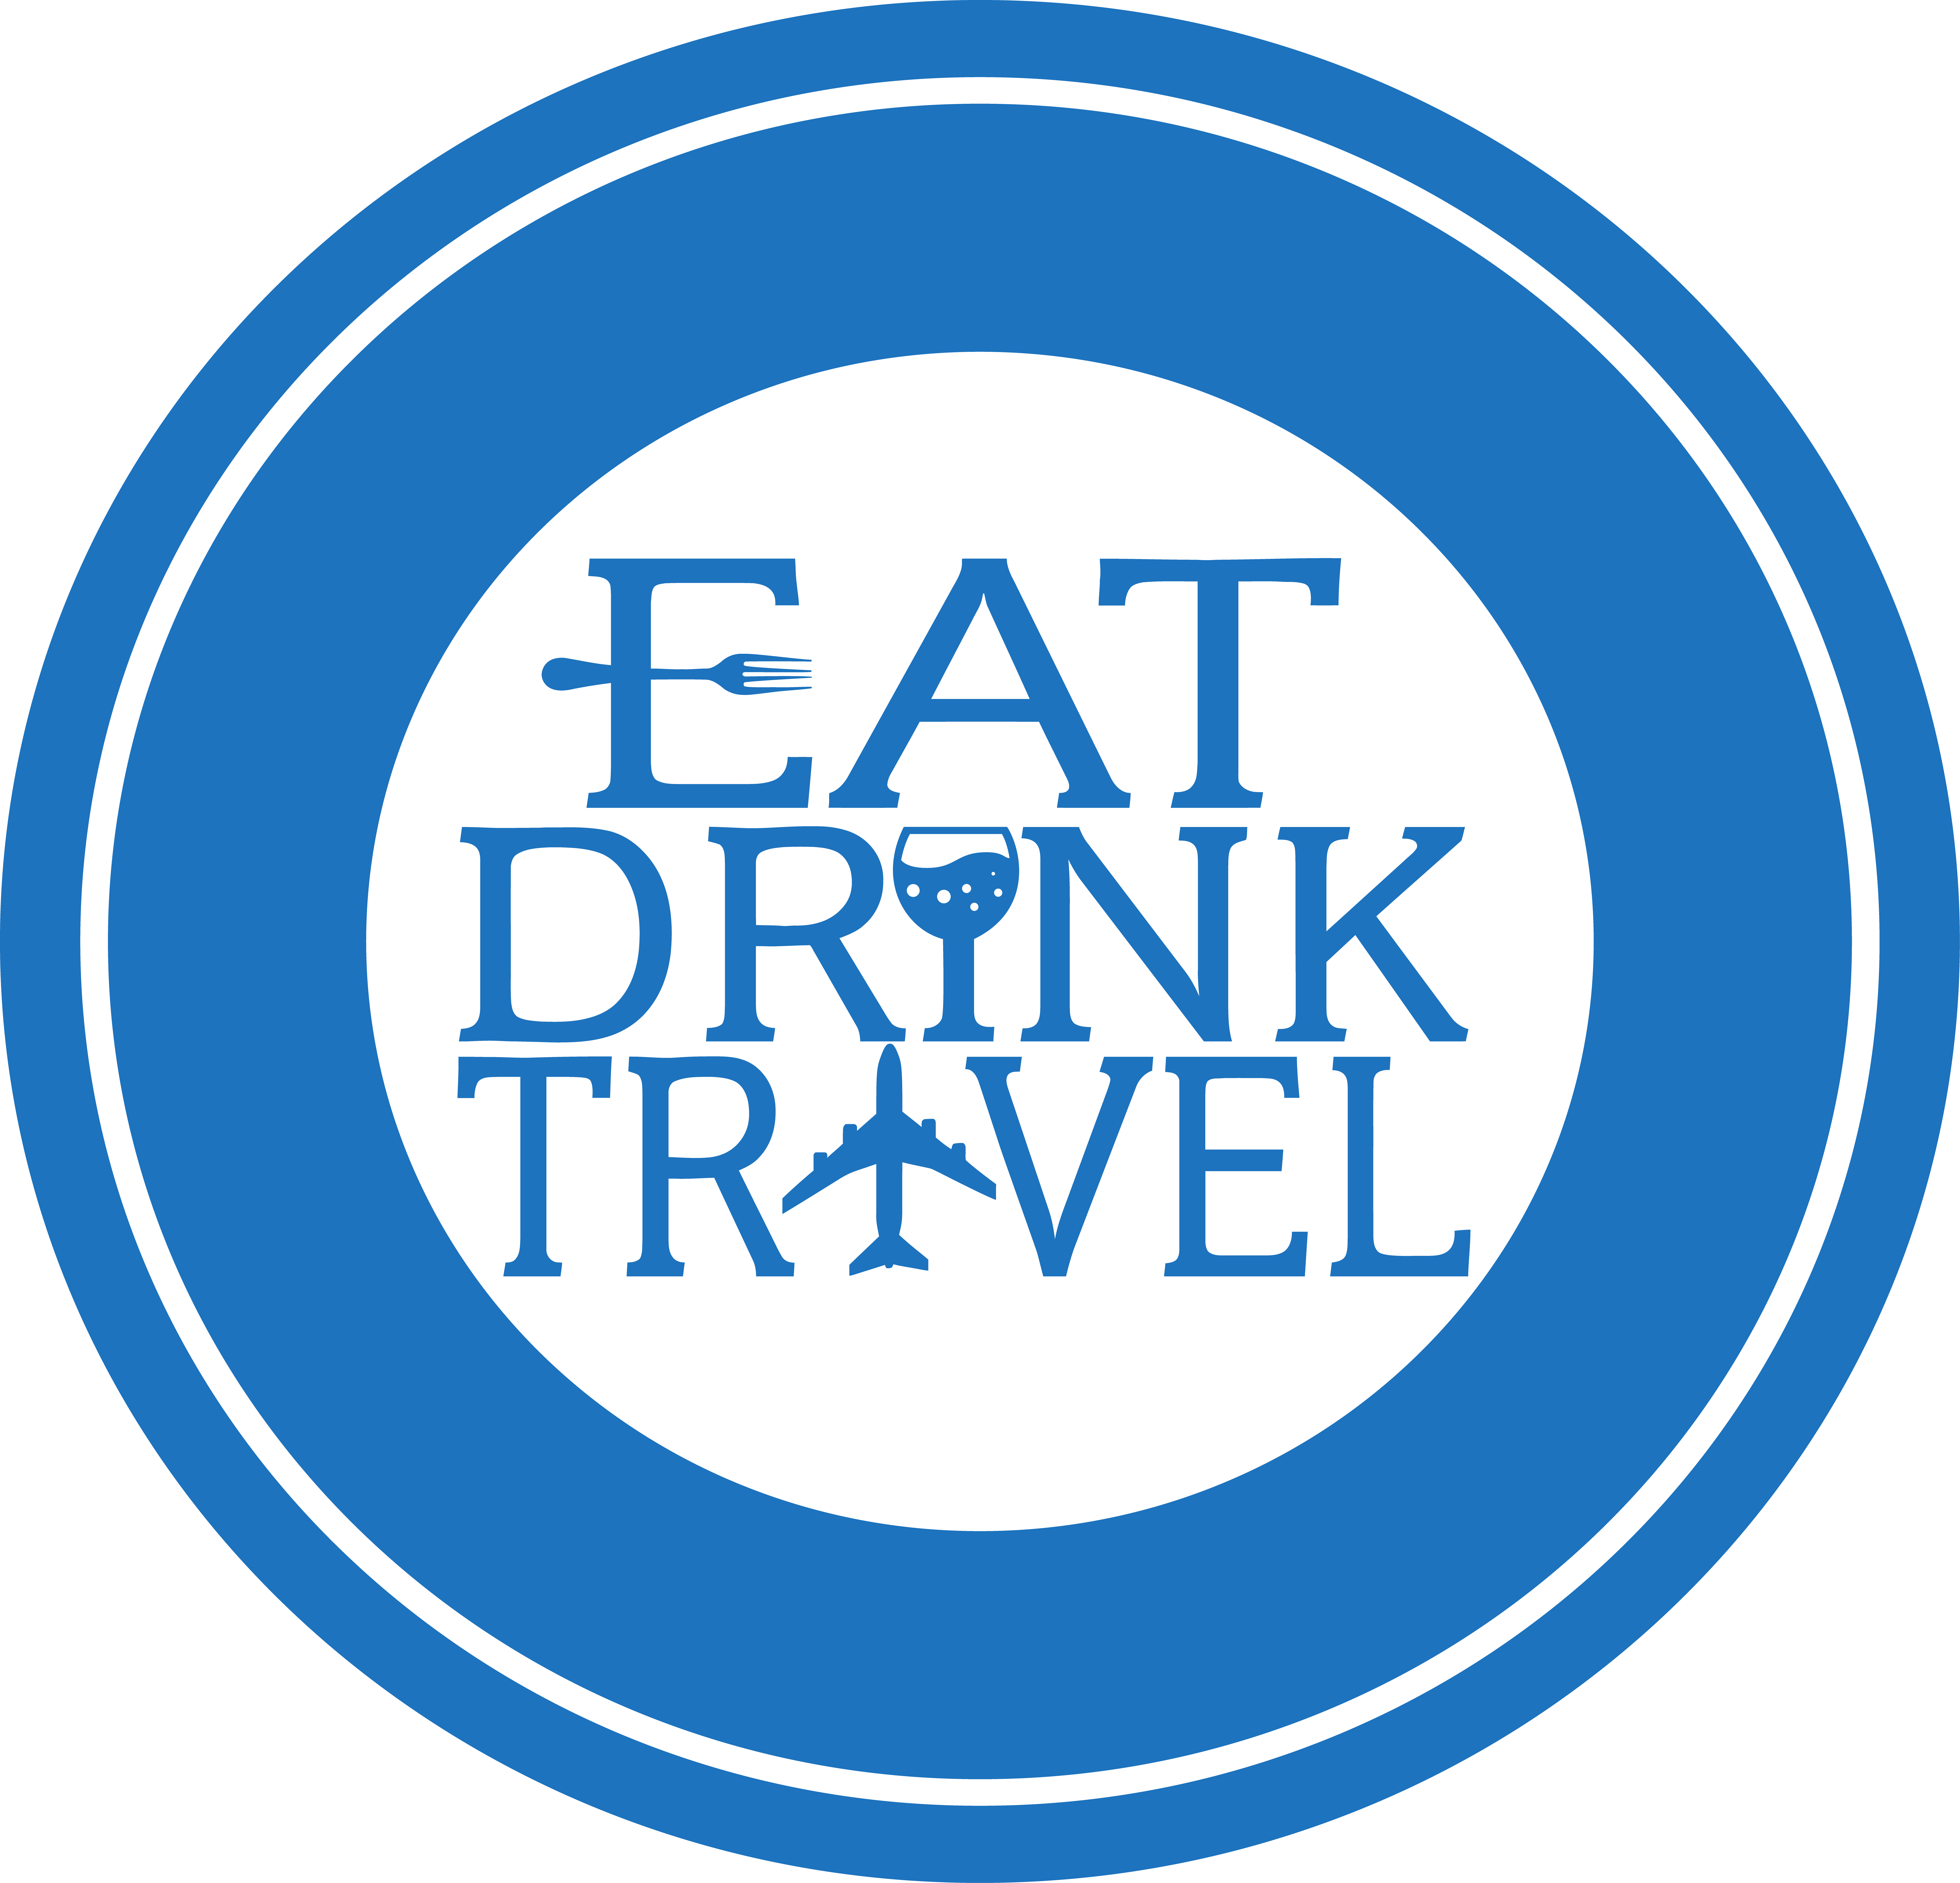 Eat Drink Travel Group | “Eat Drink Travel” Short Sleeve T-Shirt - Eat Drink Travel Group